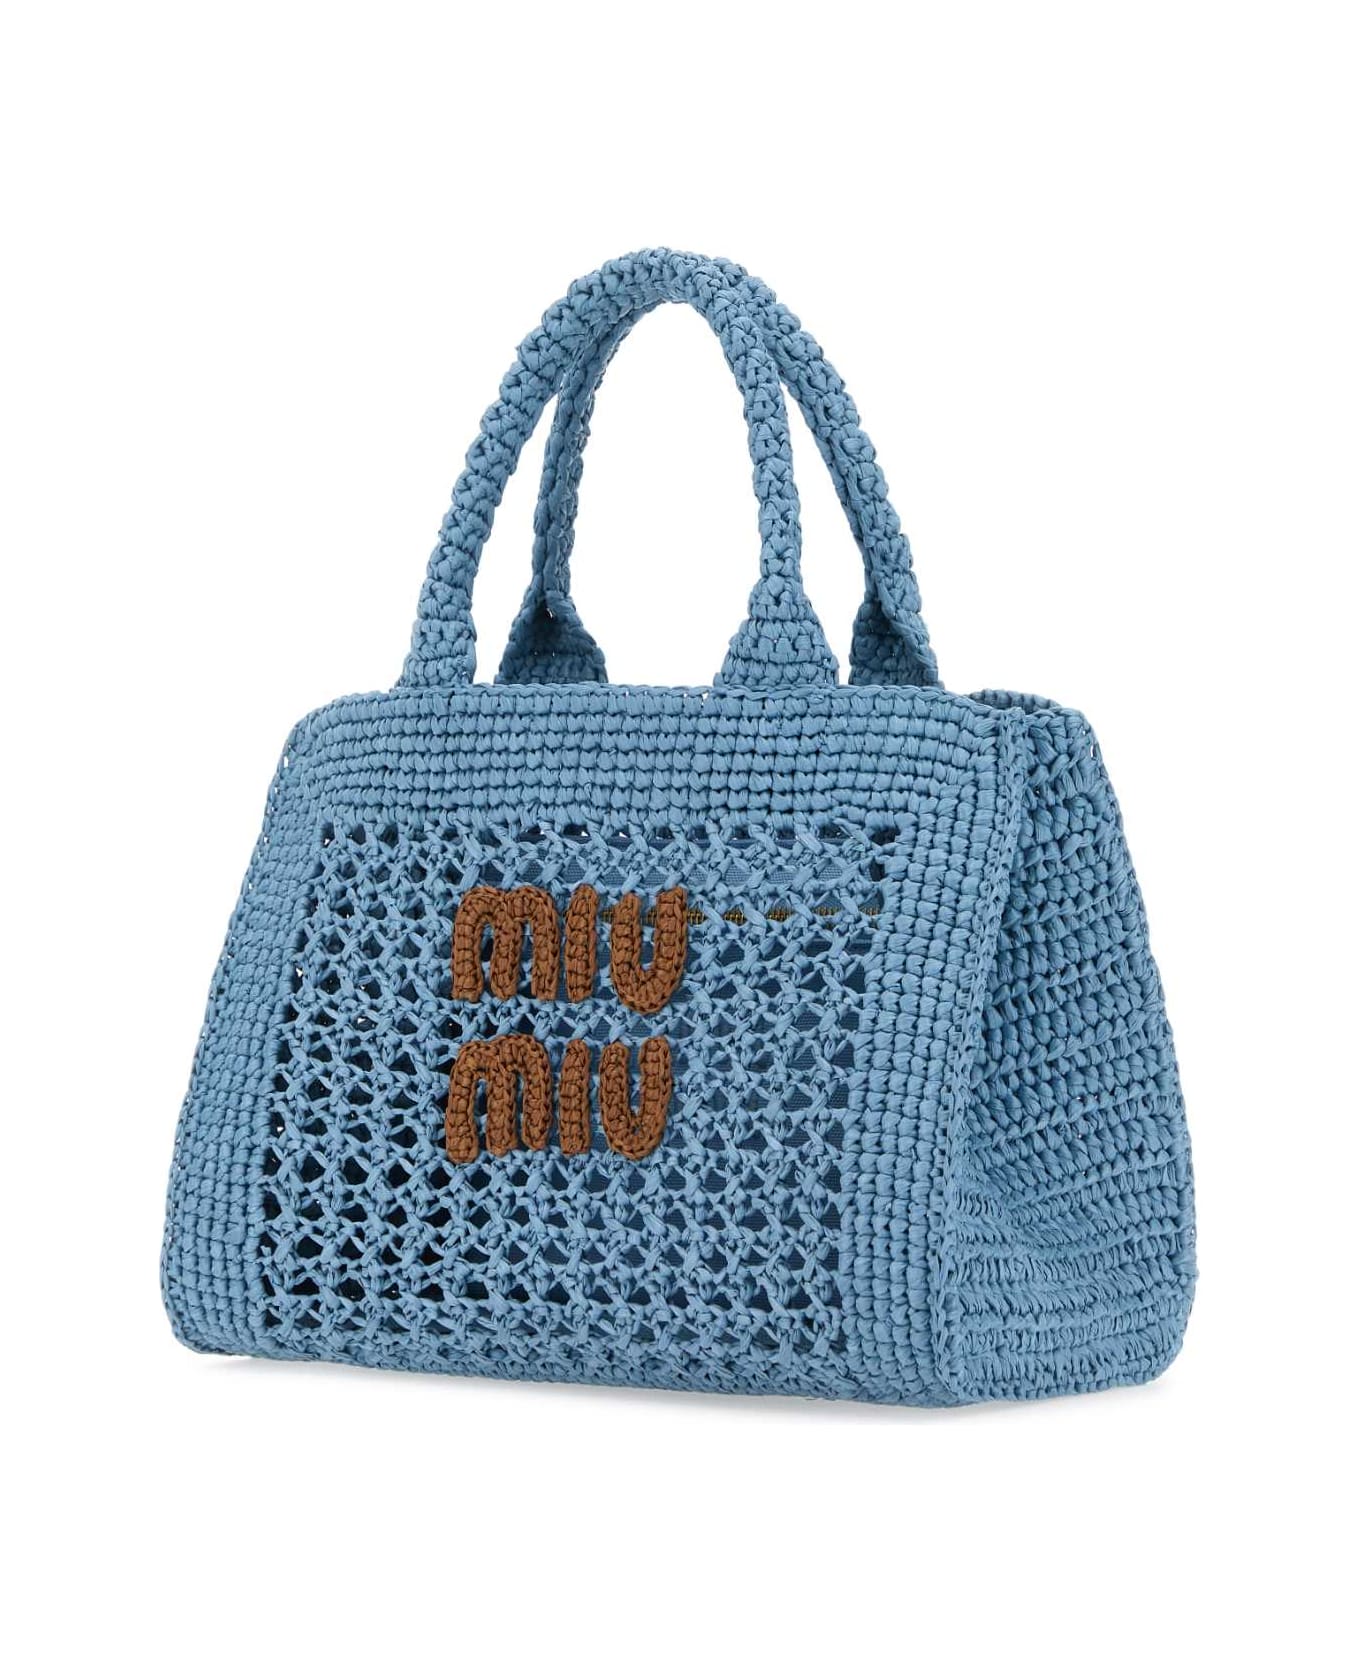 Miu Miu Light Blue Crochet Handbag - CELESTECOGNAC トートバッグ